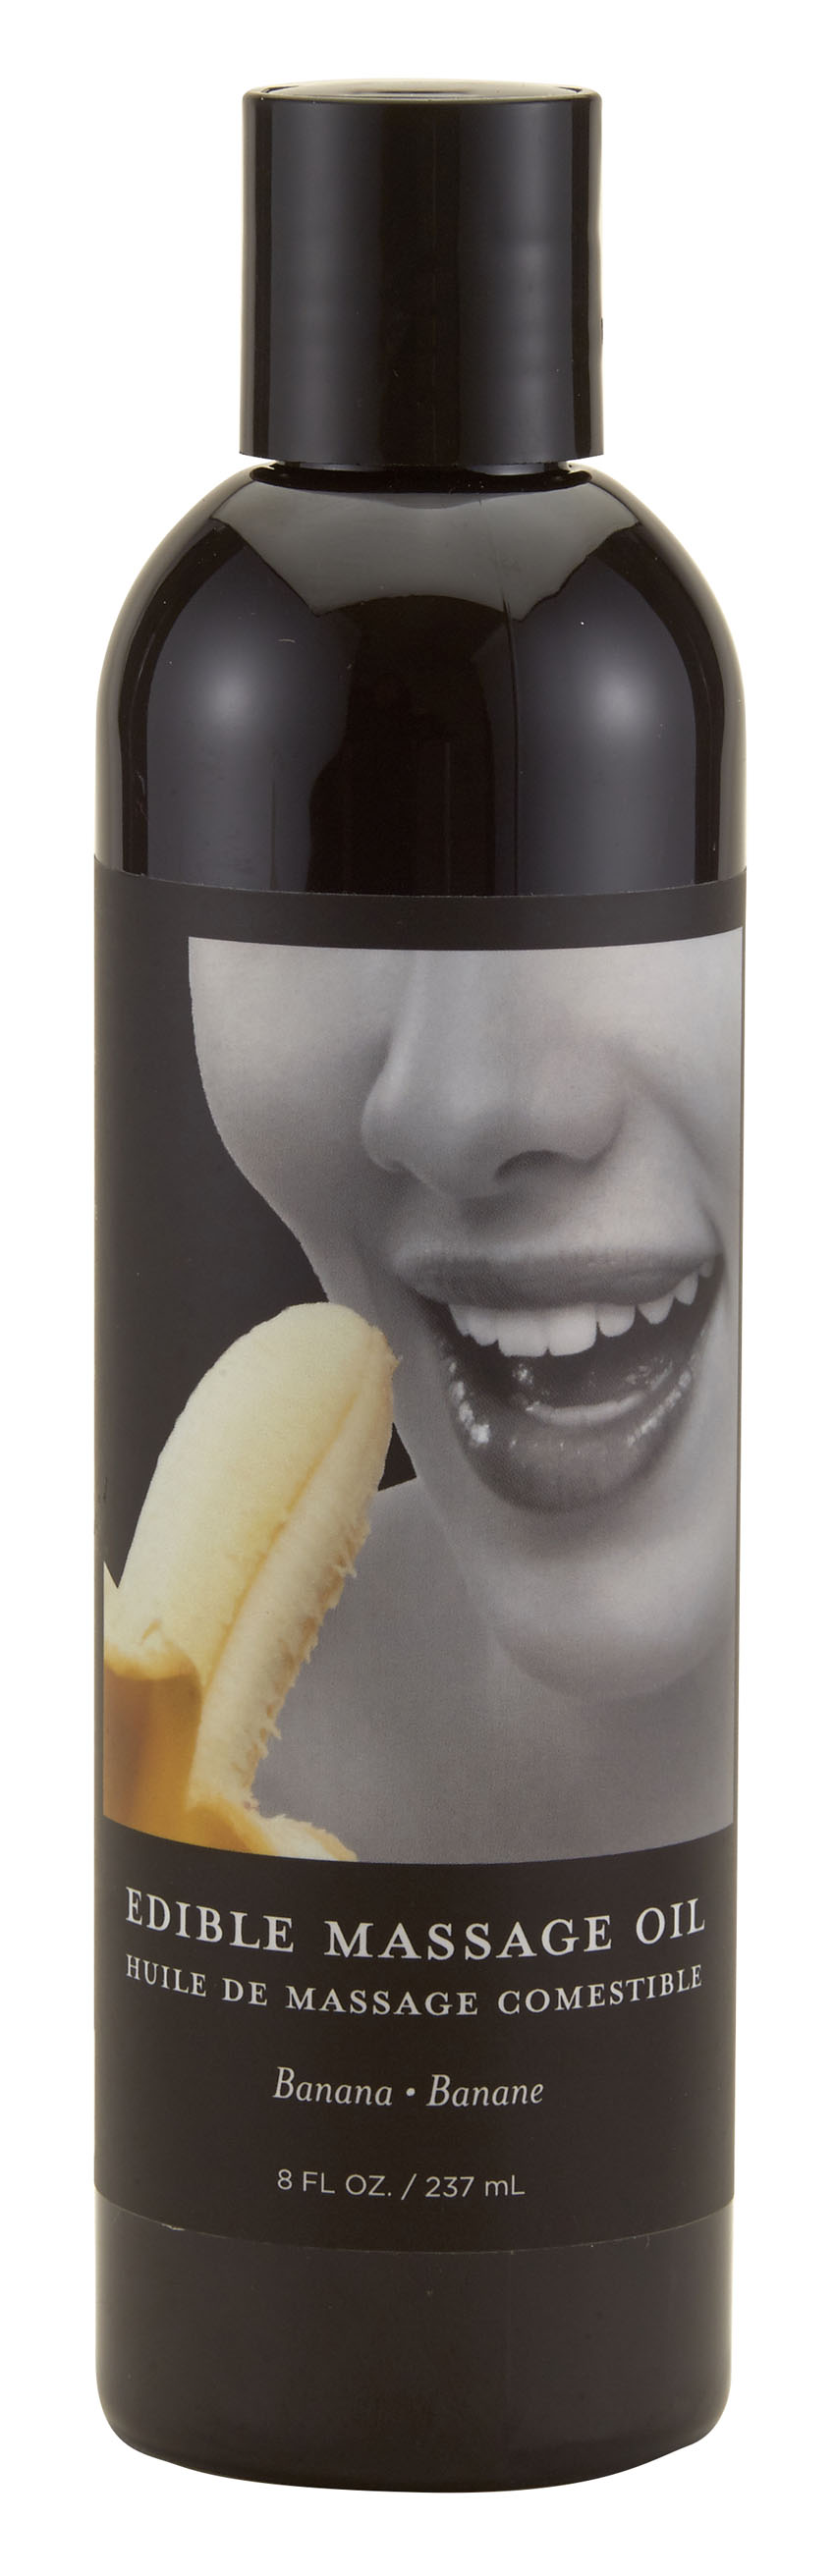 edible massage oil banana  fl. oz. 